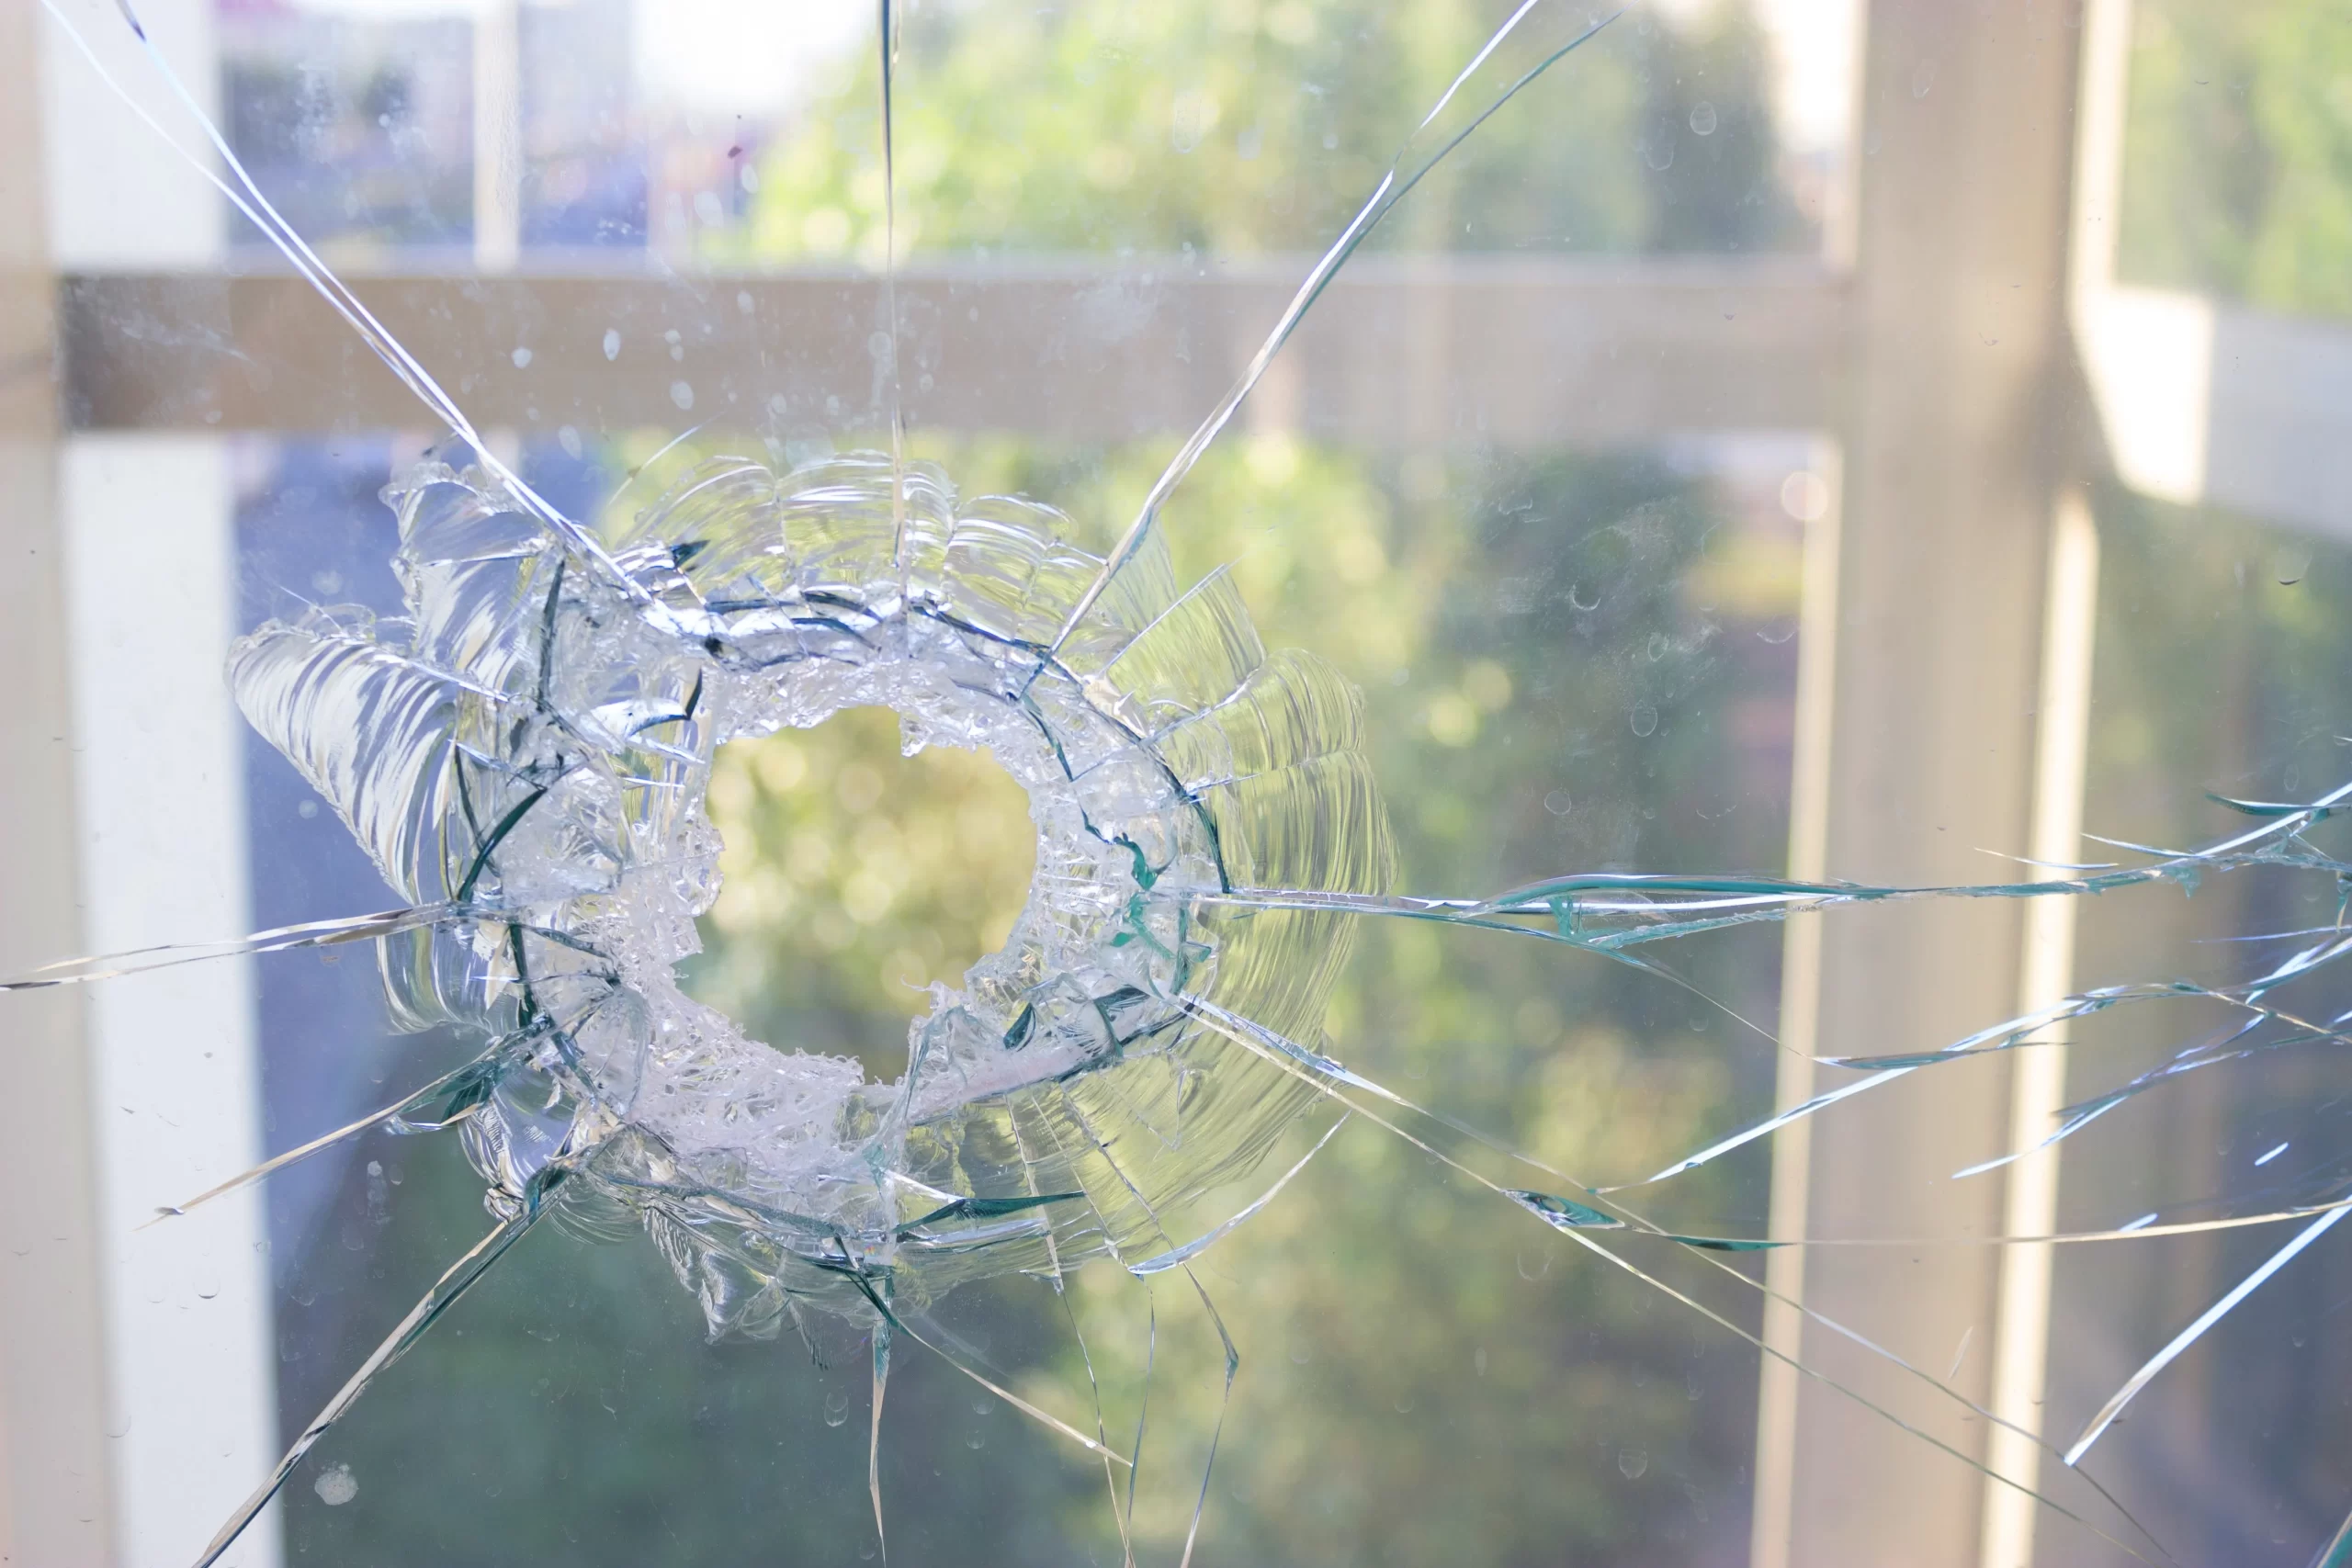 Разбил окно звук. Разбитое окно. Разбитое пластиковое окно. Разбитое окно в квартире. Разбитое стекло в окне.